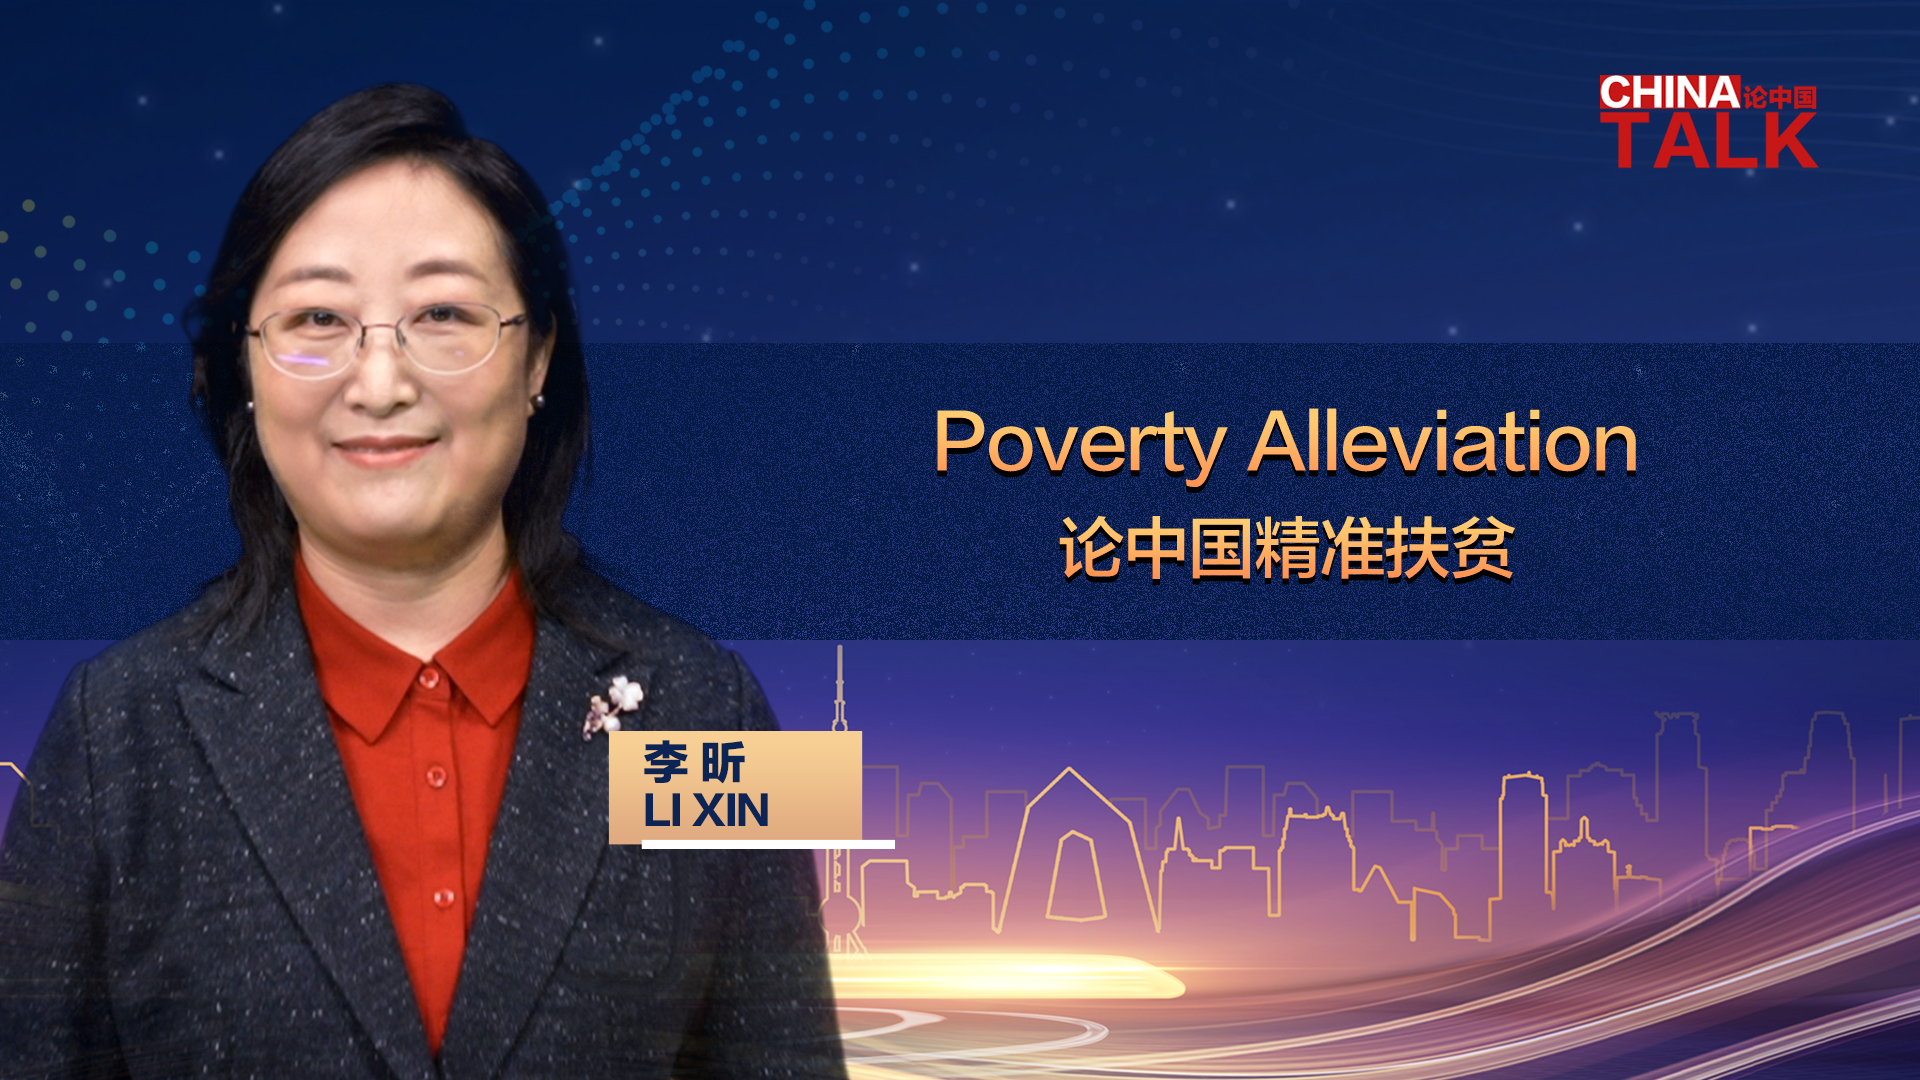 China Talk on poverty alleviation